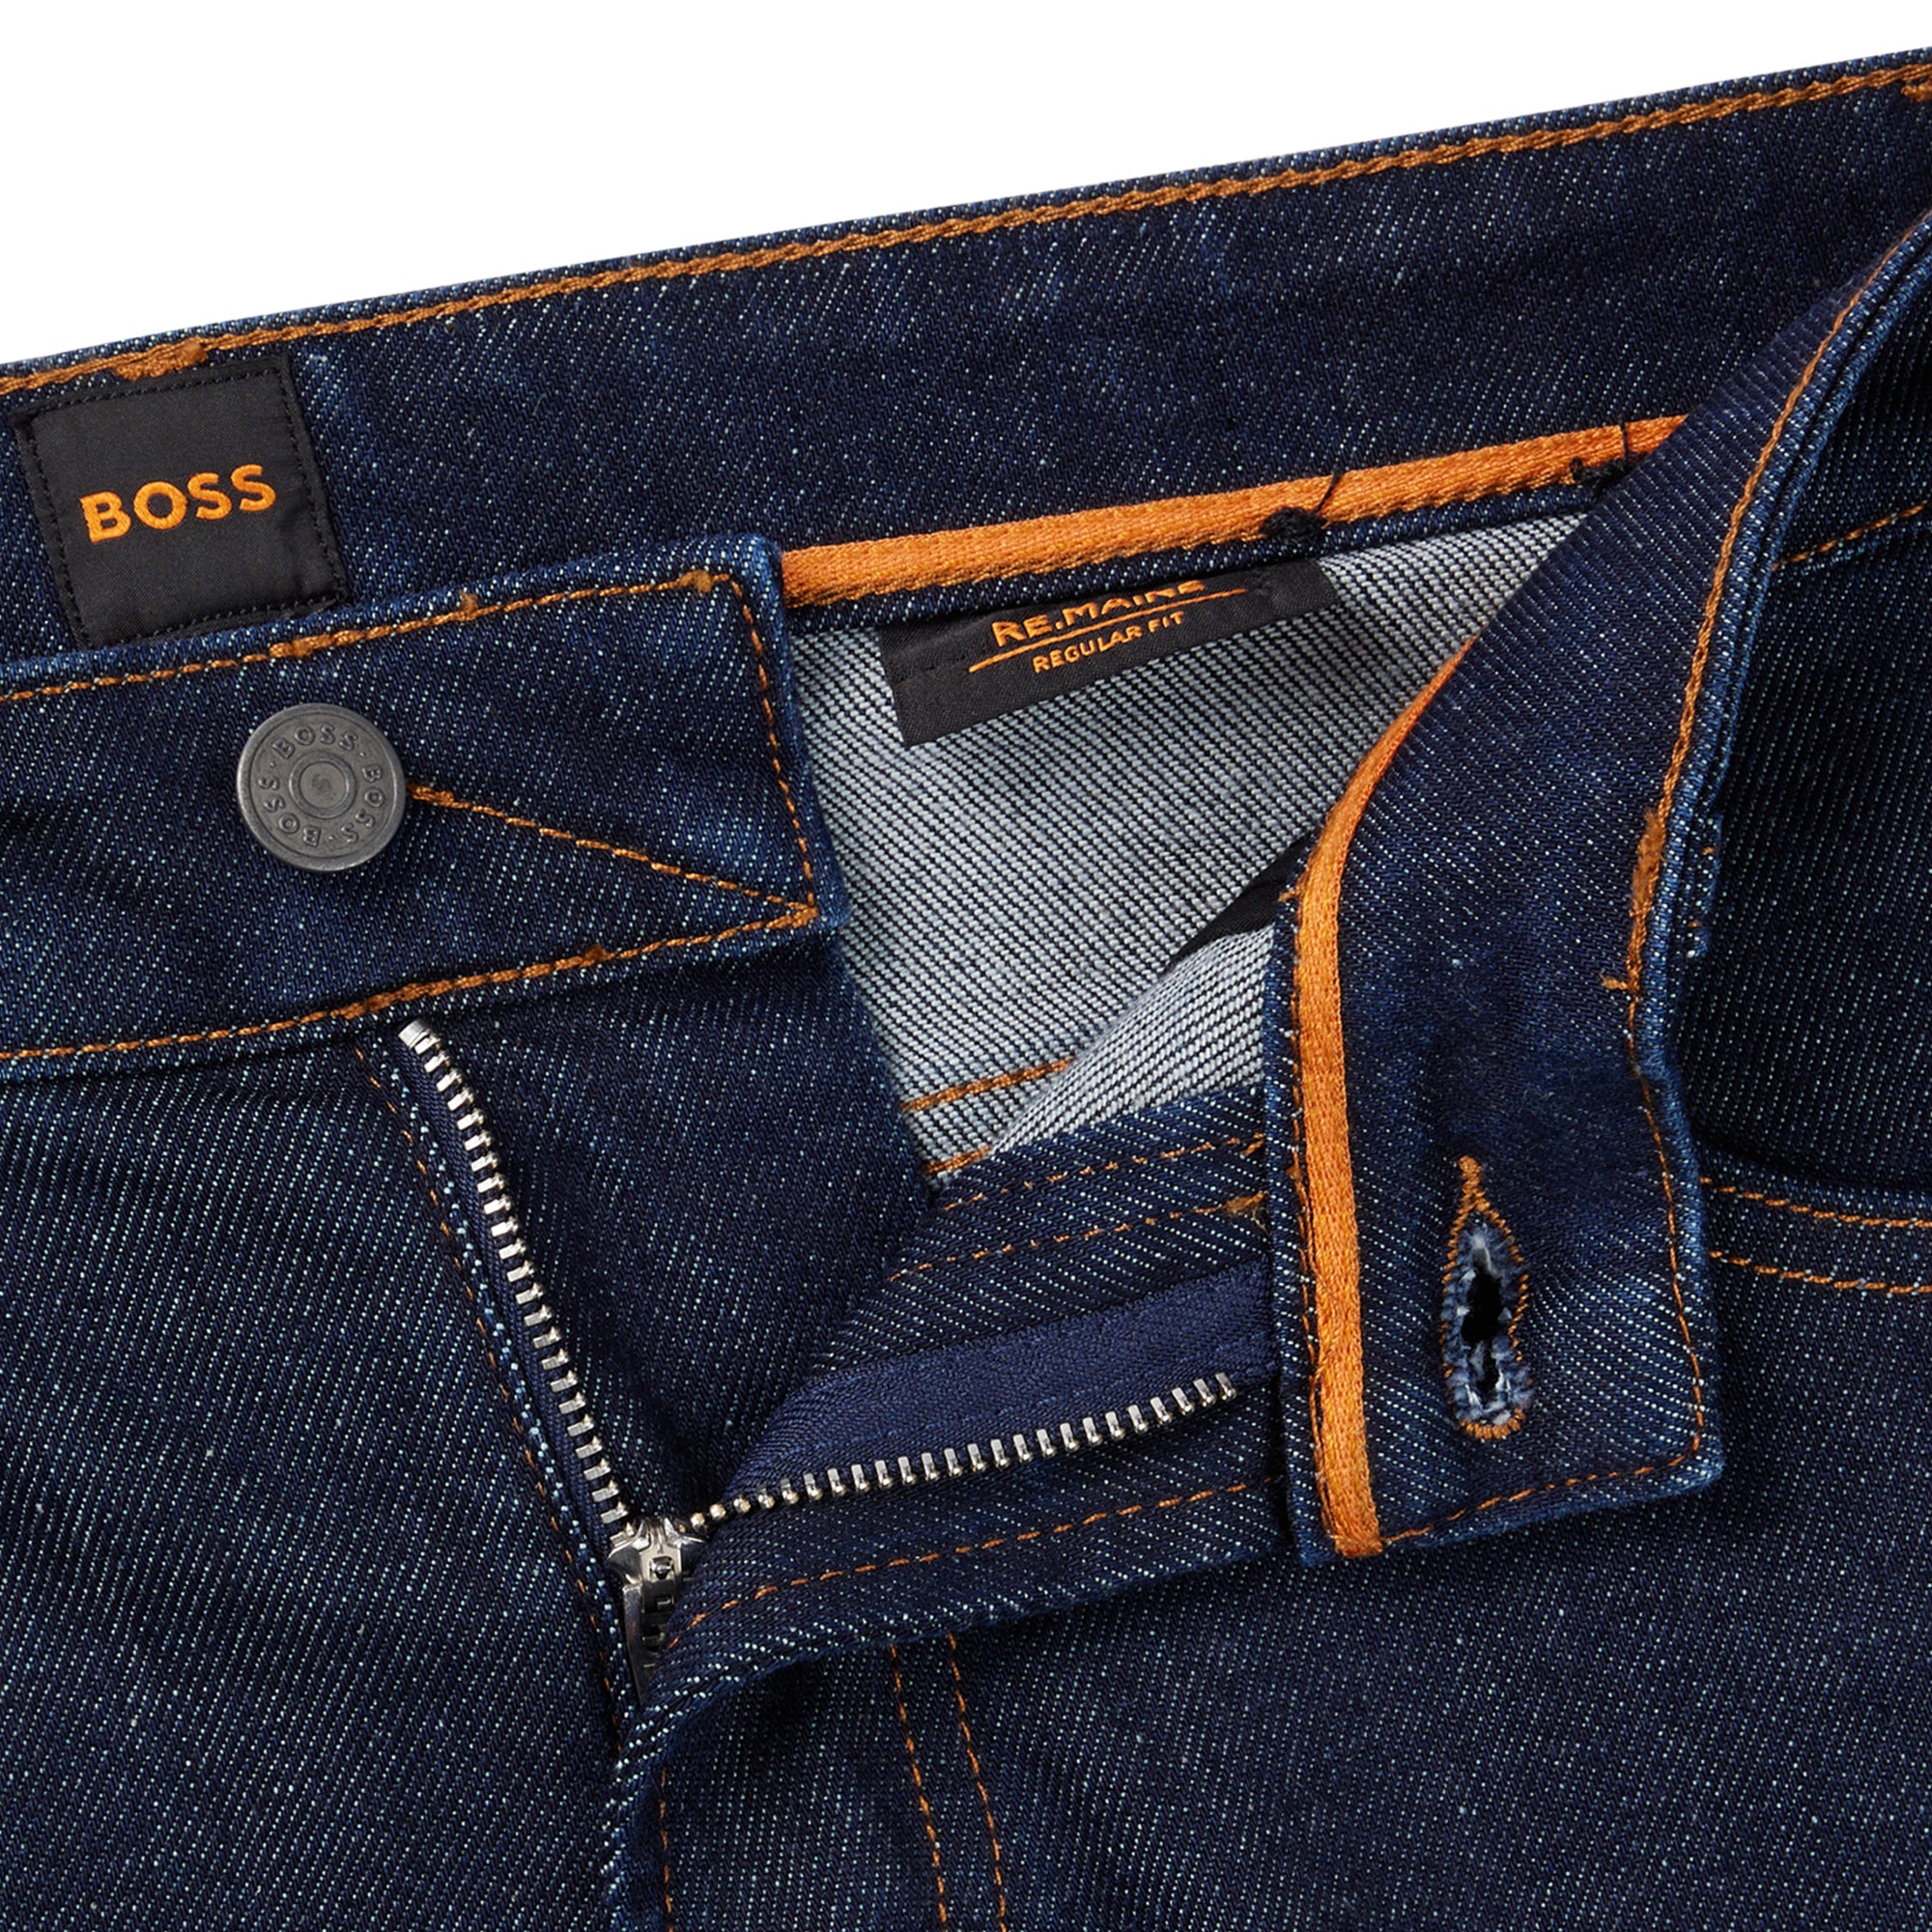 Boss ReMaine Regular Fit Jeans - BC-C Rinse Dark Blue